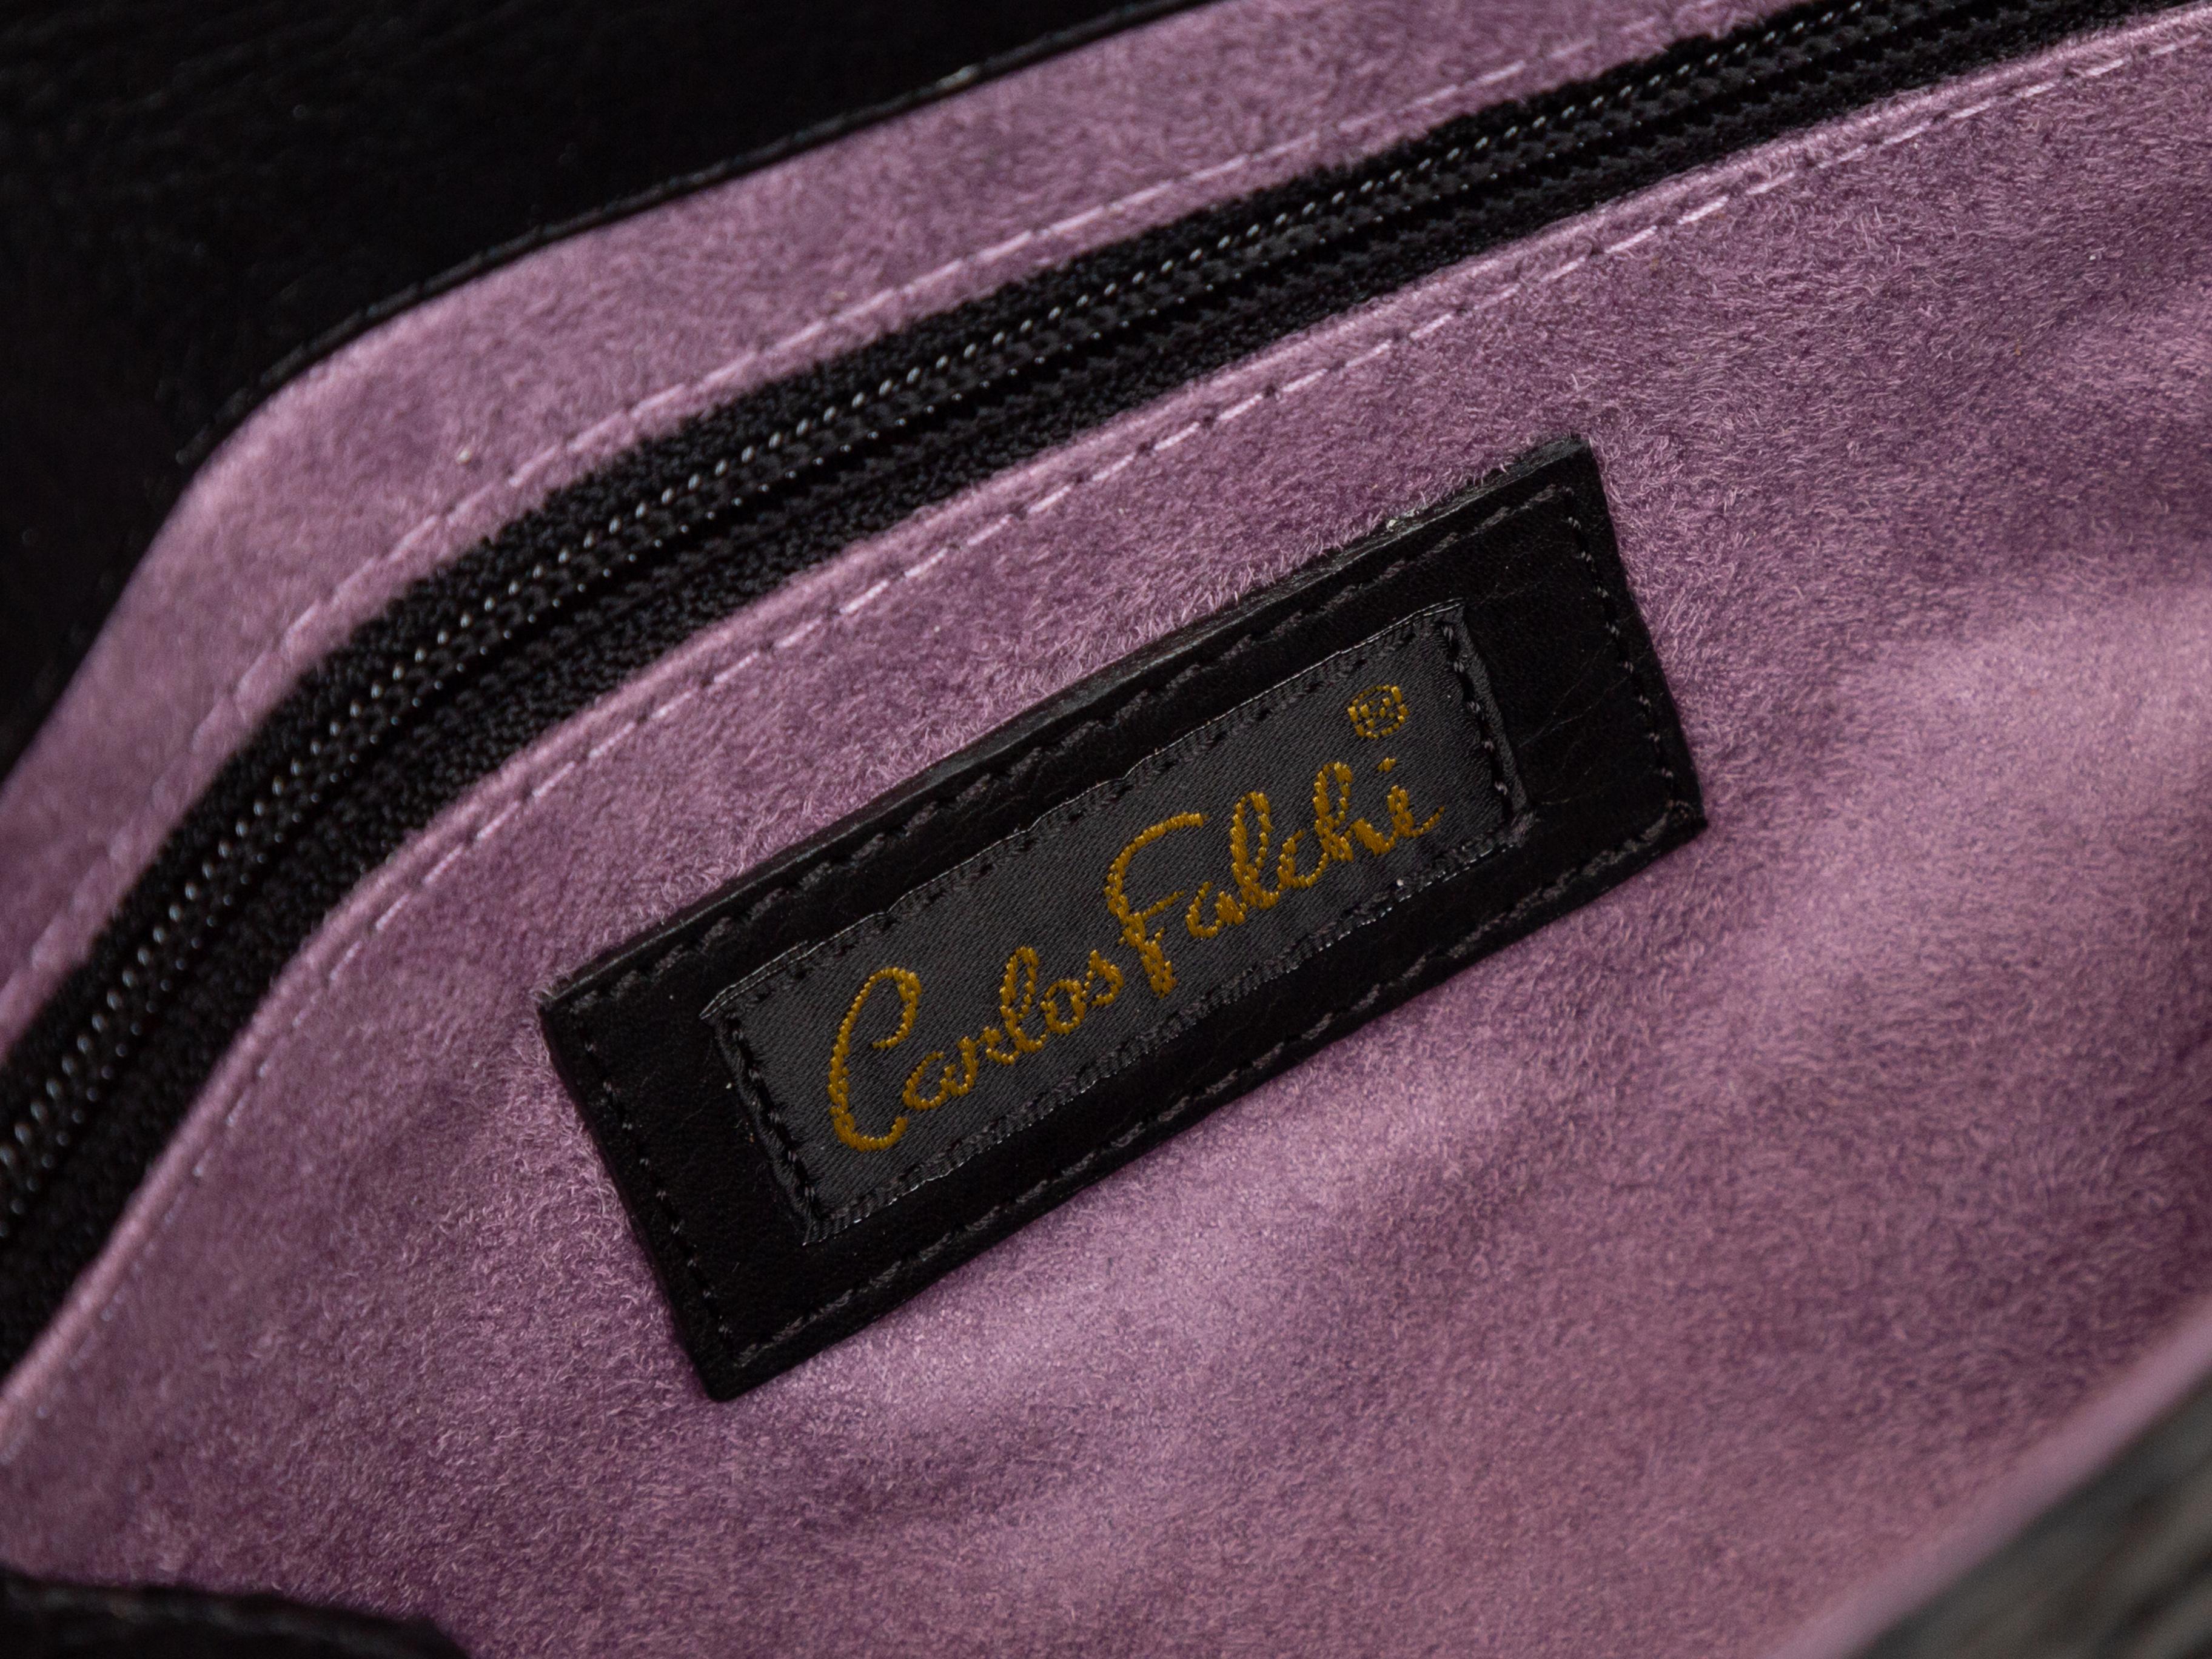 Product details: Black python clutch by Carlos Falchi. Purple suede interior. Interior zip pocket. Optional silver-tone chain-link shoulder strap. 14.5